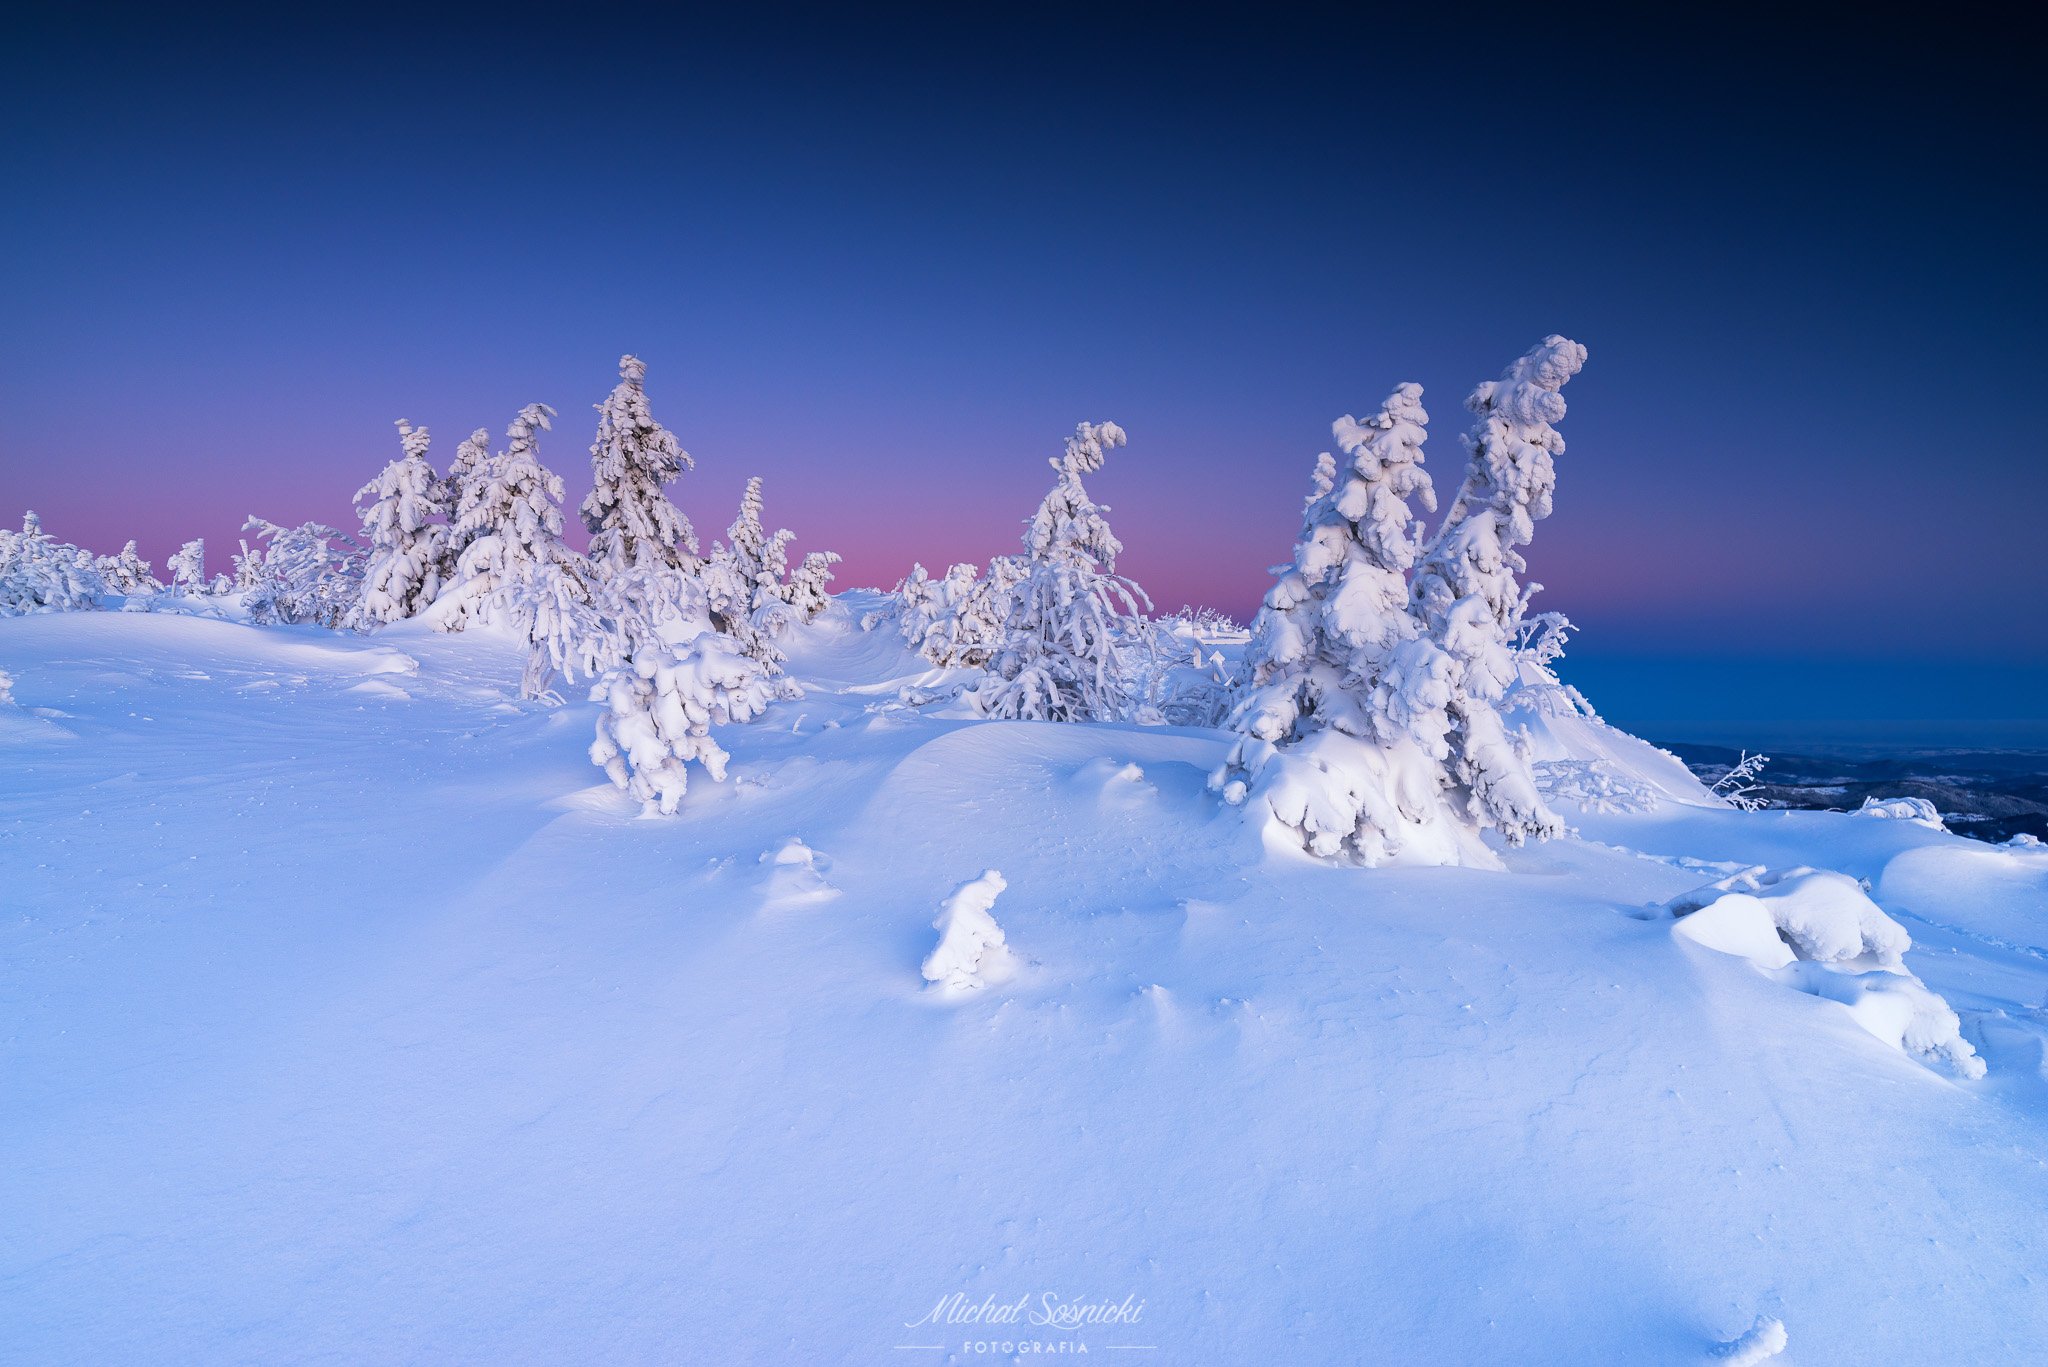 #snow #sunrise #trees #tree #winter #poland #mountains #cold #colors #benro #benq #pentax, Michał Sośnicki